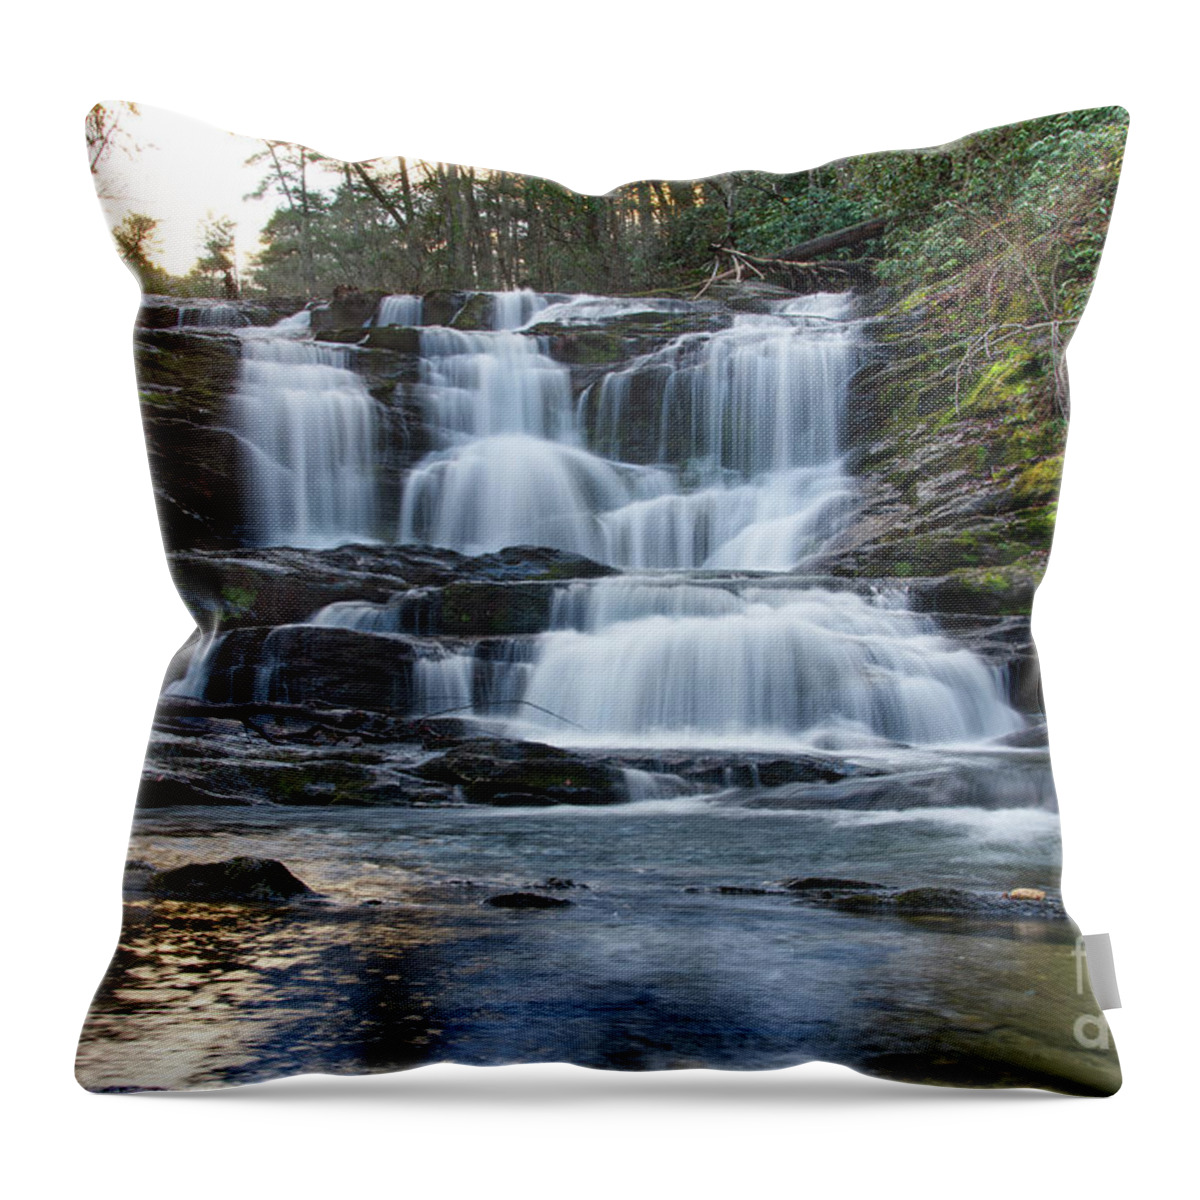 Conasauga Falls Throw Pillow featuring the photograph Conasauga Waterfall 11 by Phil Perkins